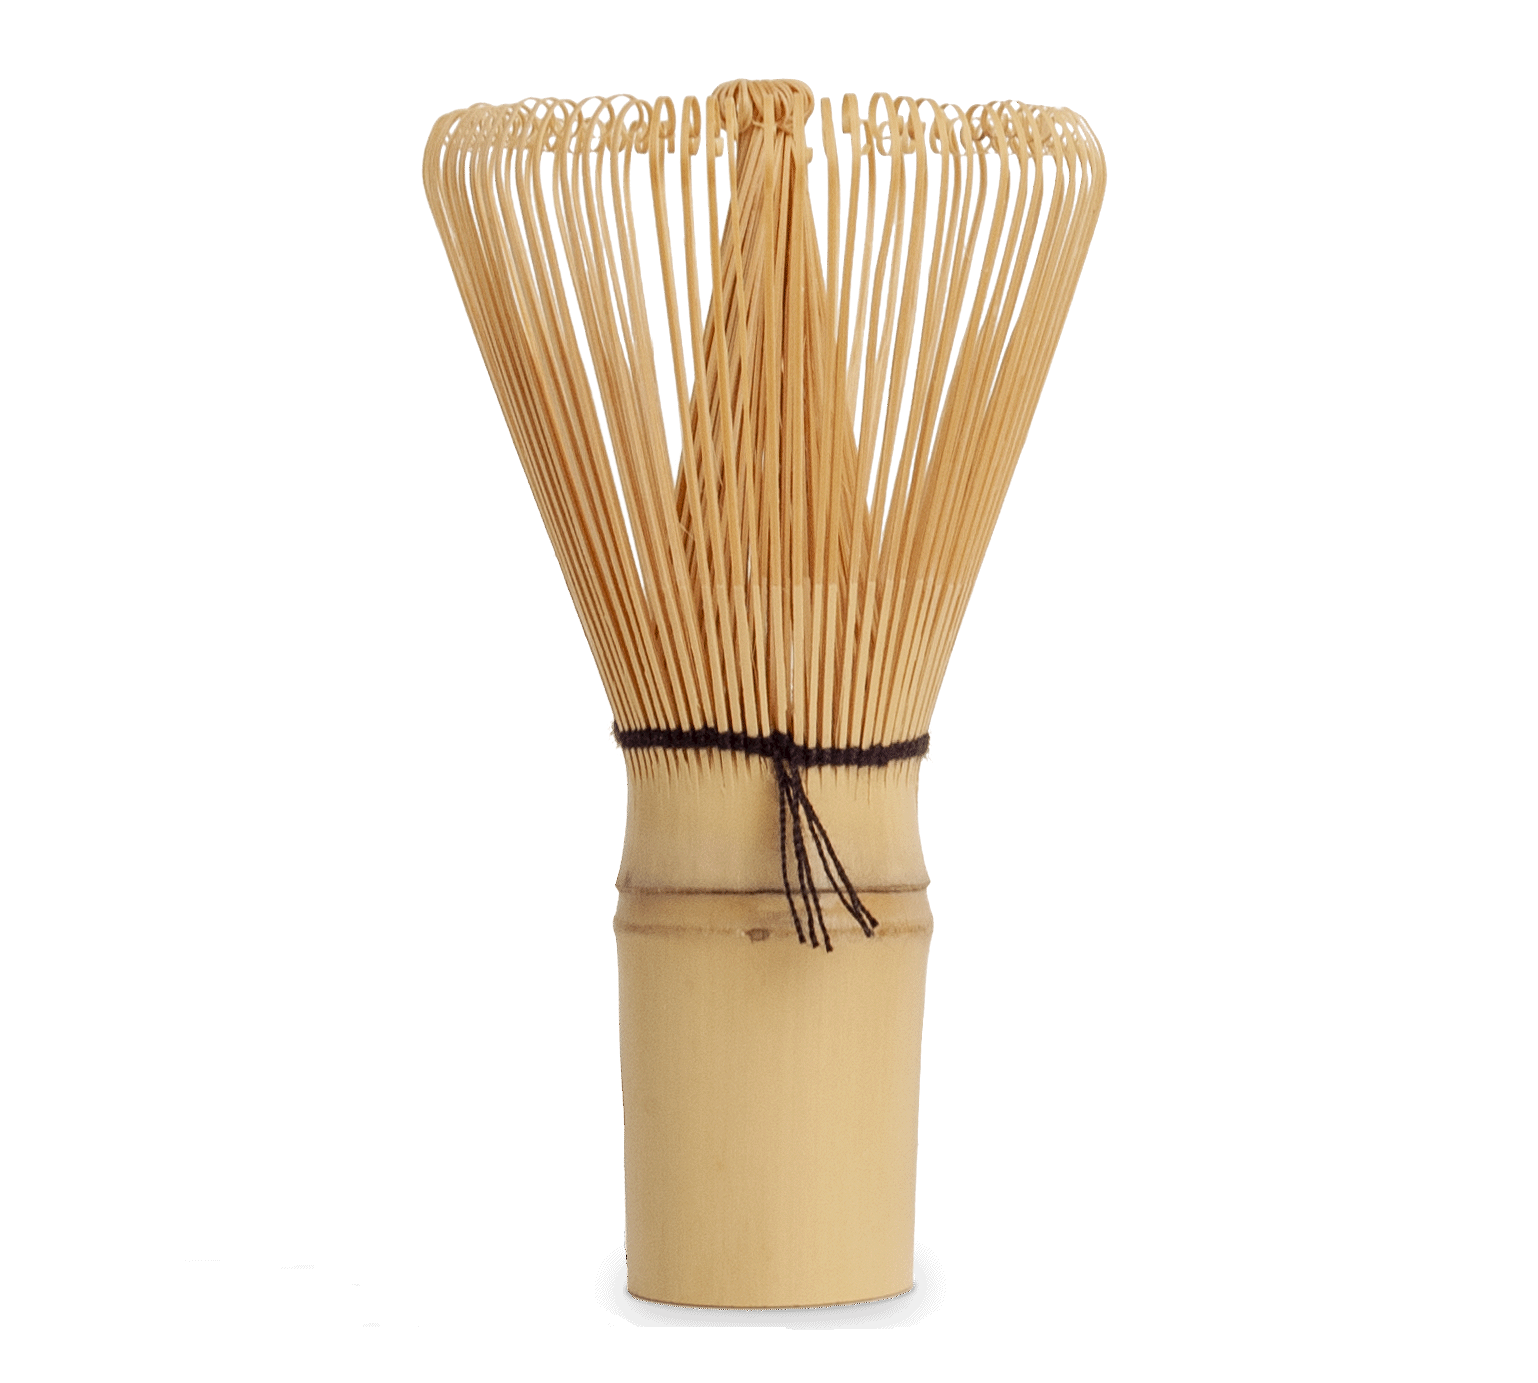 Nero Confezione Regalo Tazza da Tè Matcha una Frusta di Bambù per Matcha e un Cucchiaino di Bambù per Matcha 3 Pezzi - Comprendente una Tazza da Tè Matcha 